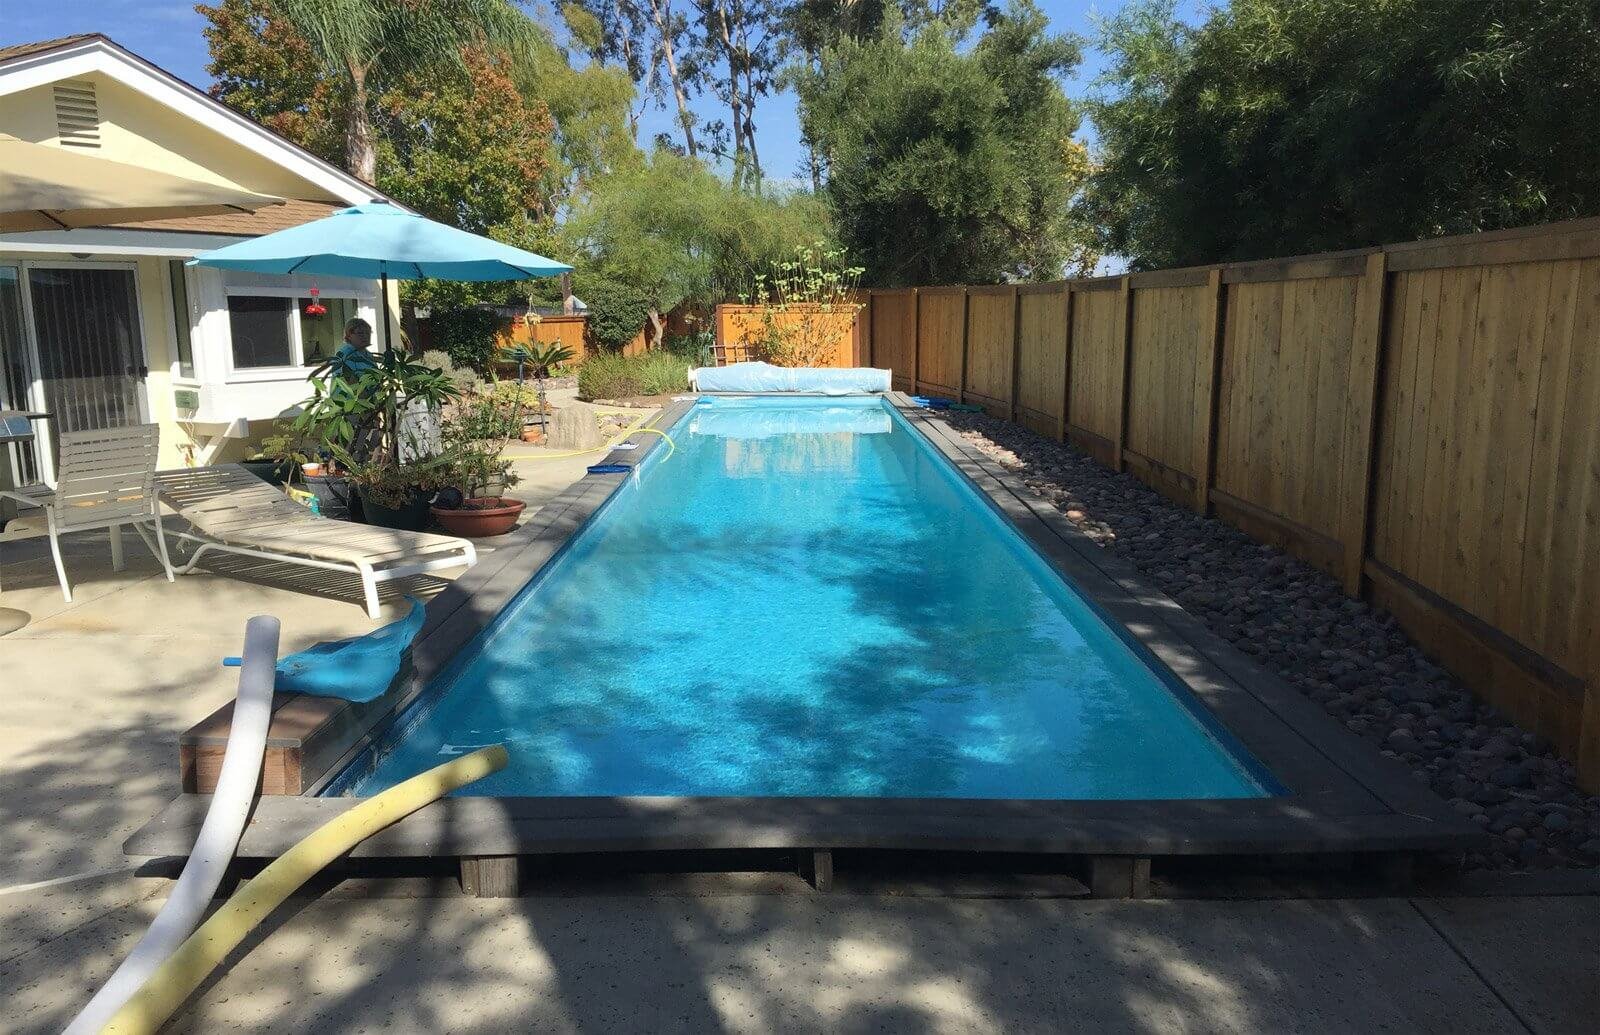 6.San-Diego-Swimming-Pool-Removal-Before.jpg